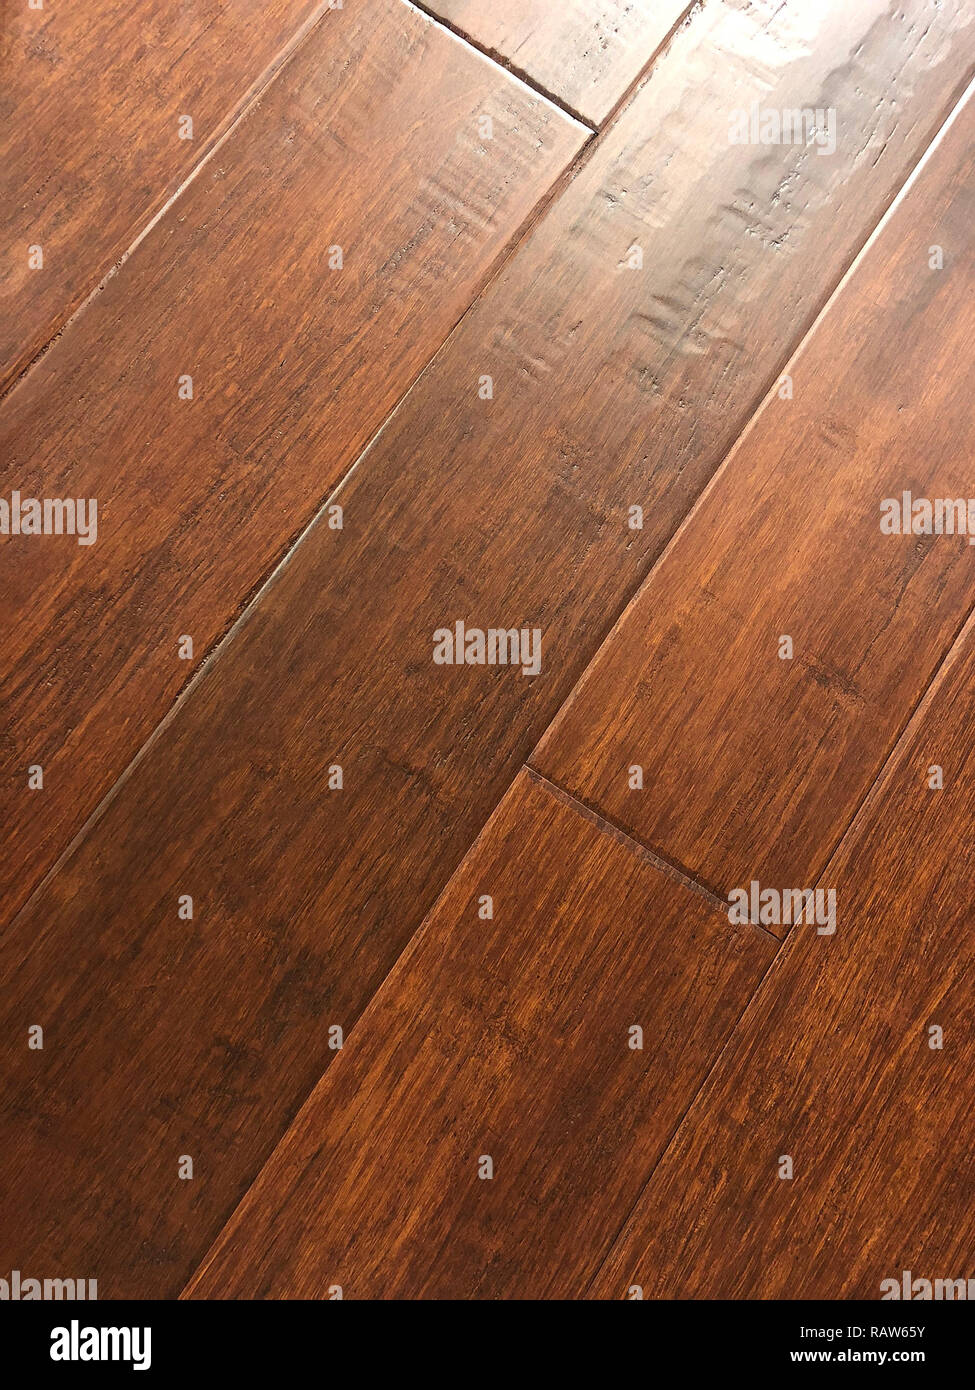 Hardwood floor made of maple wood Stock Photo